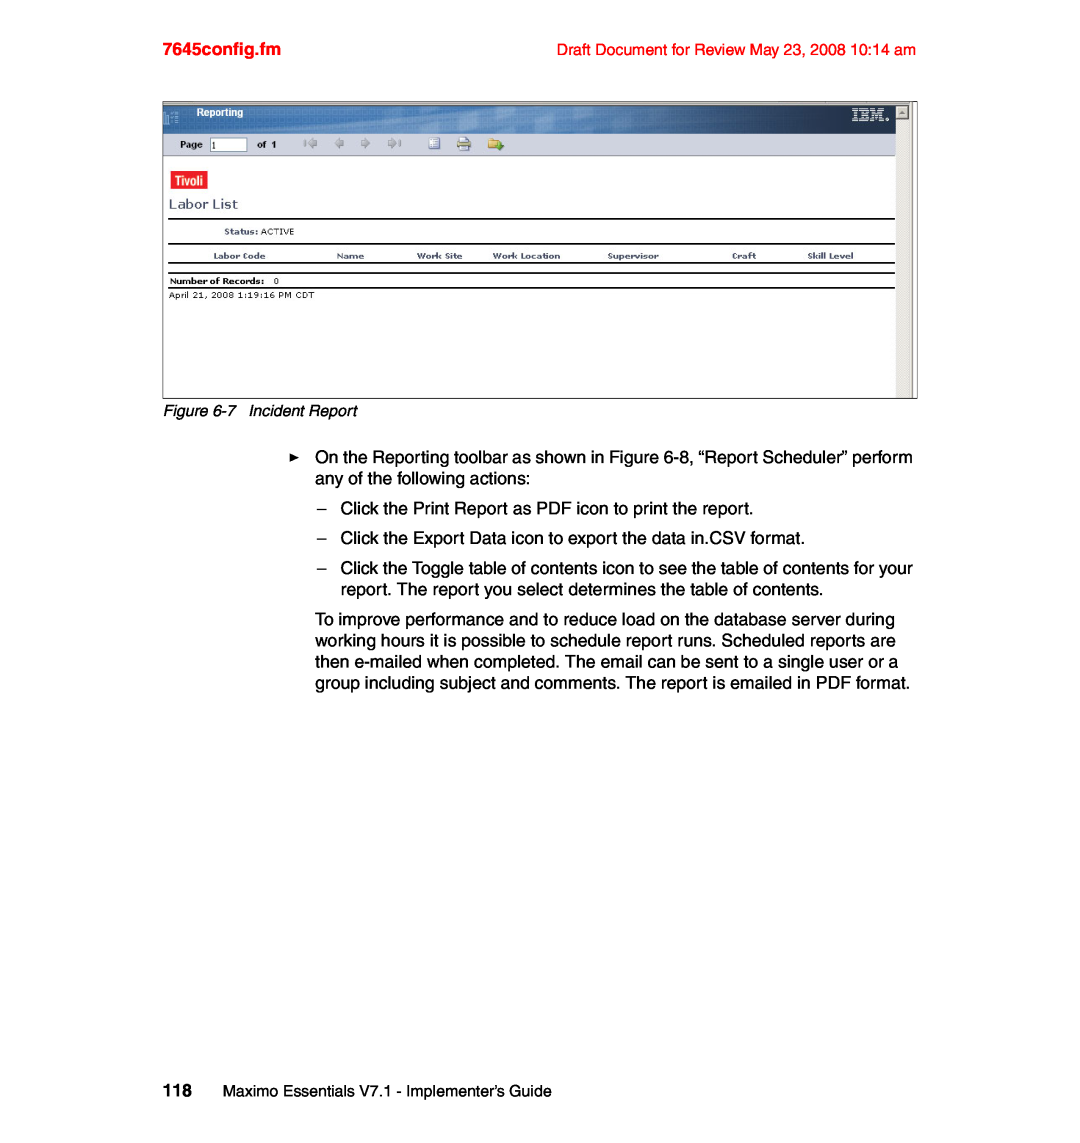 IBM SG24-7645-00 manual 7645config.fm, 7Incident Report, 118Maximo Essentials V7.1 - Implementer’s Guide 